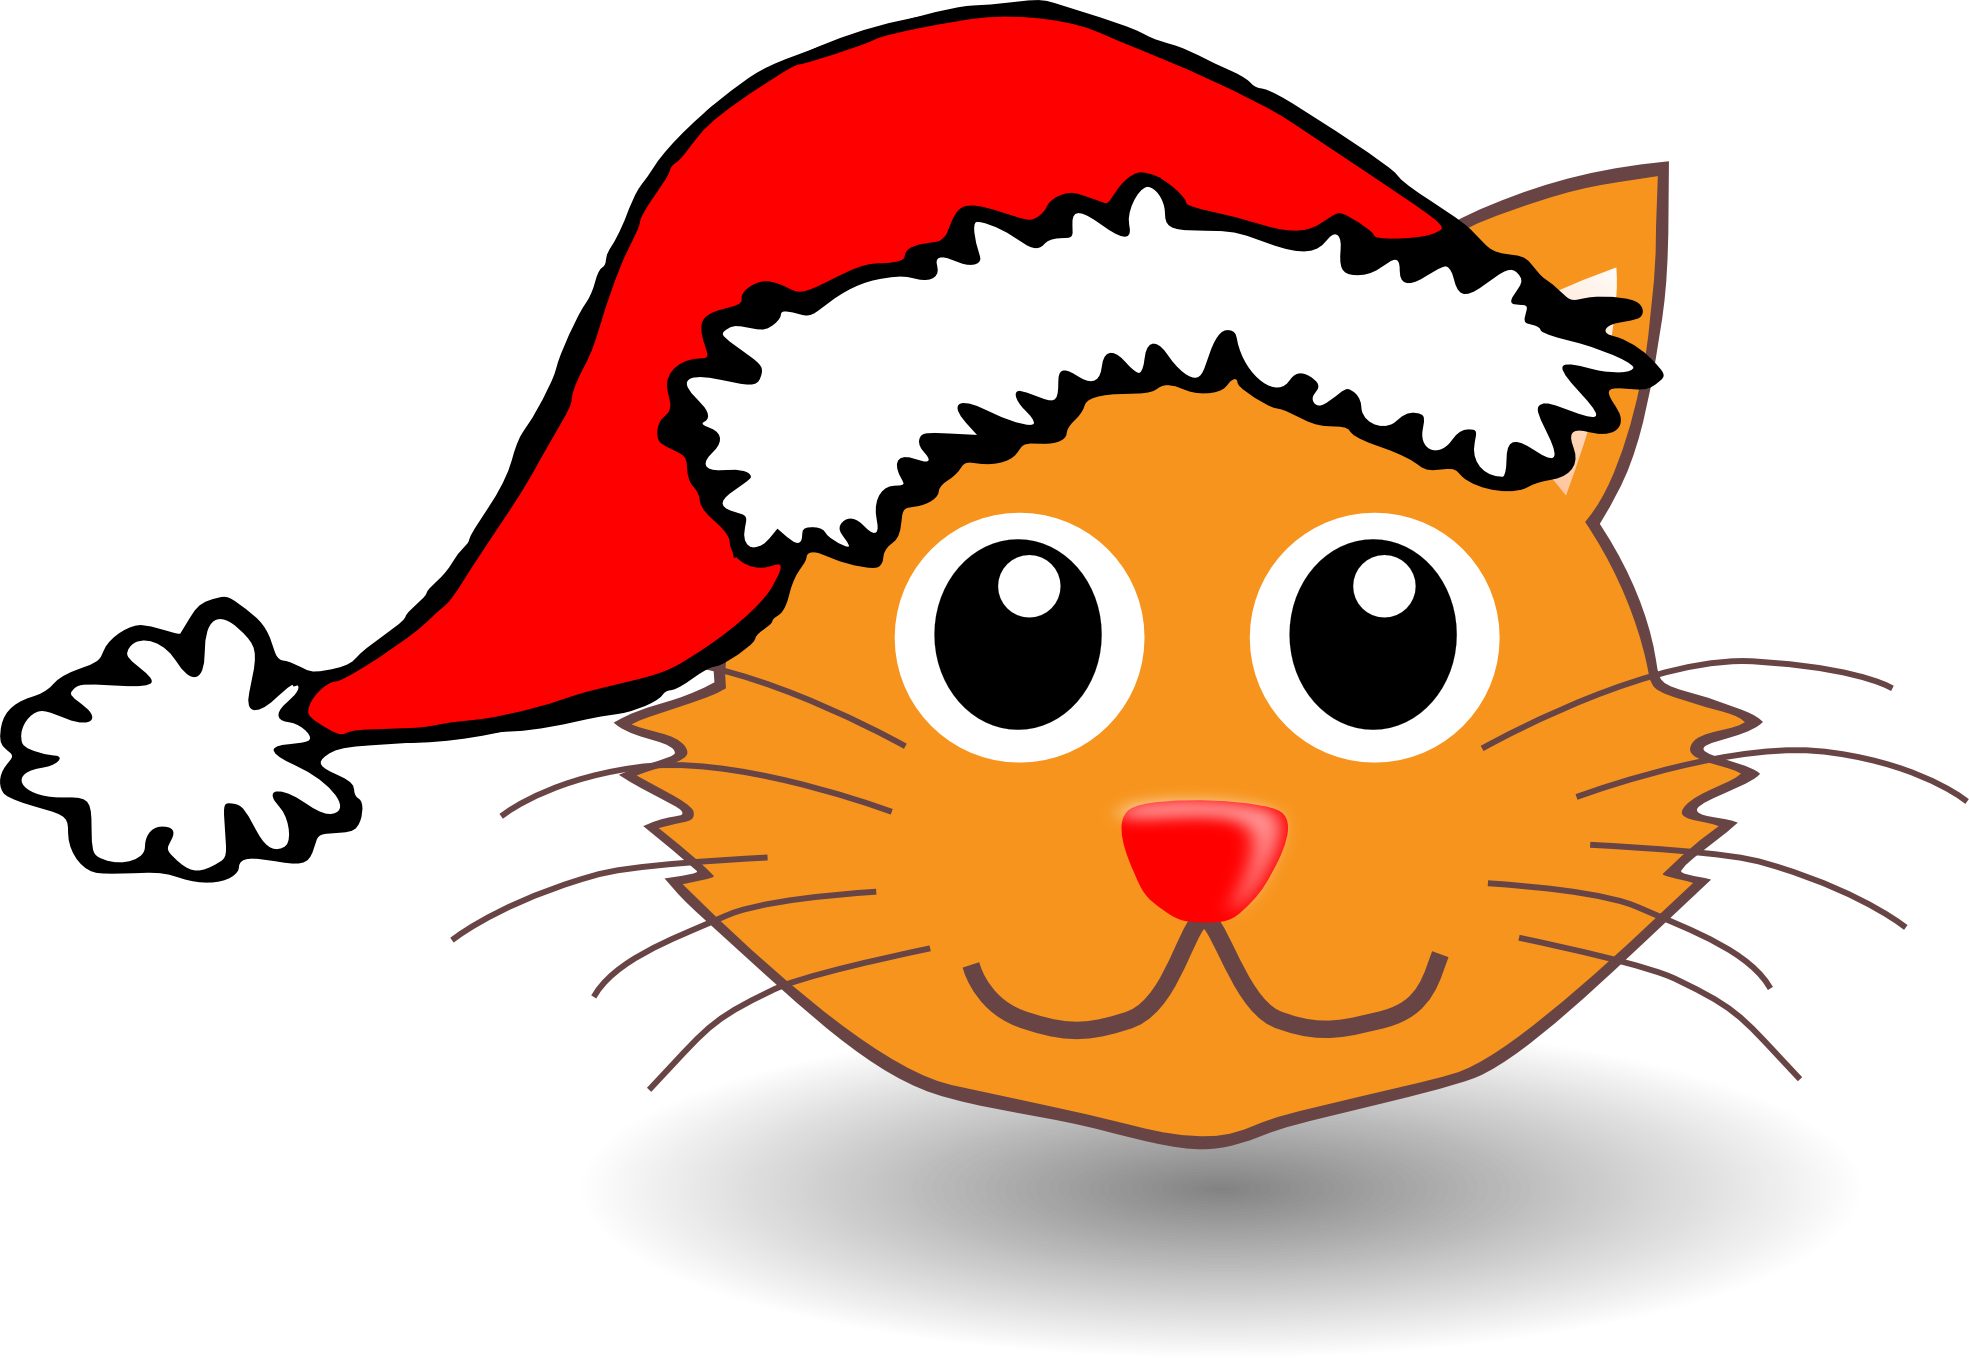 palomaironique Cat 1 Face Cartoon with Santa hat ...